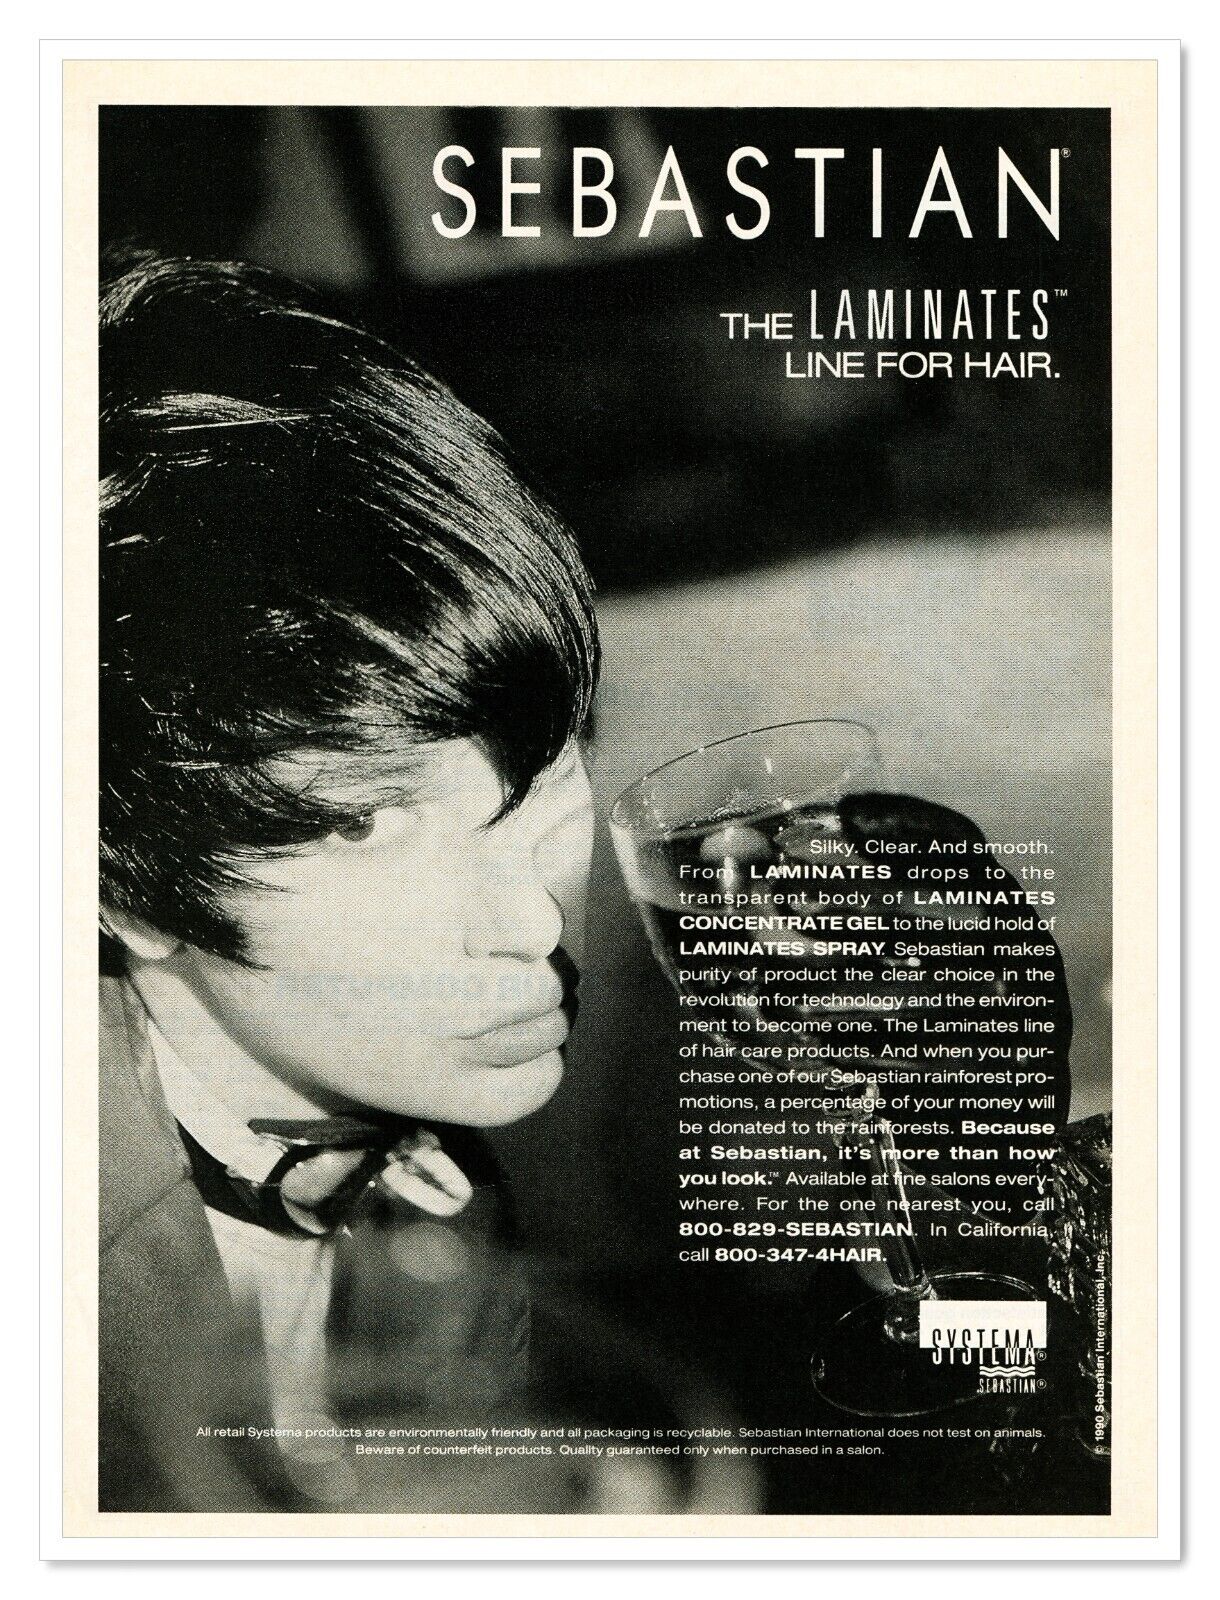 Sebastian Laminates Line Hair Products Vintage 1990 Full-Page Magazine Ad